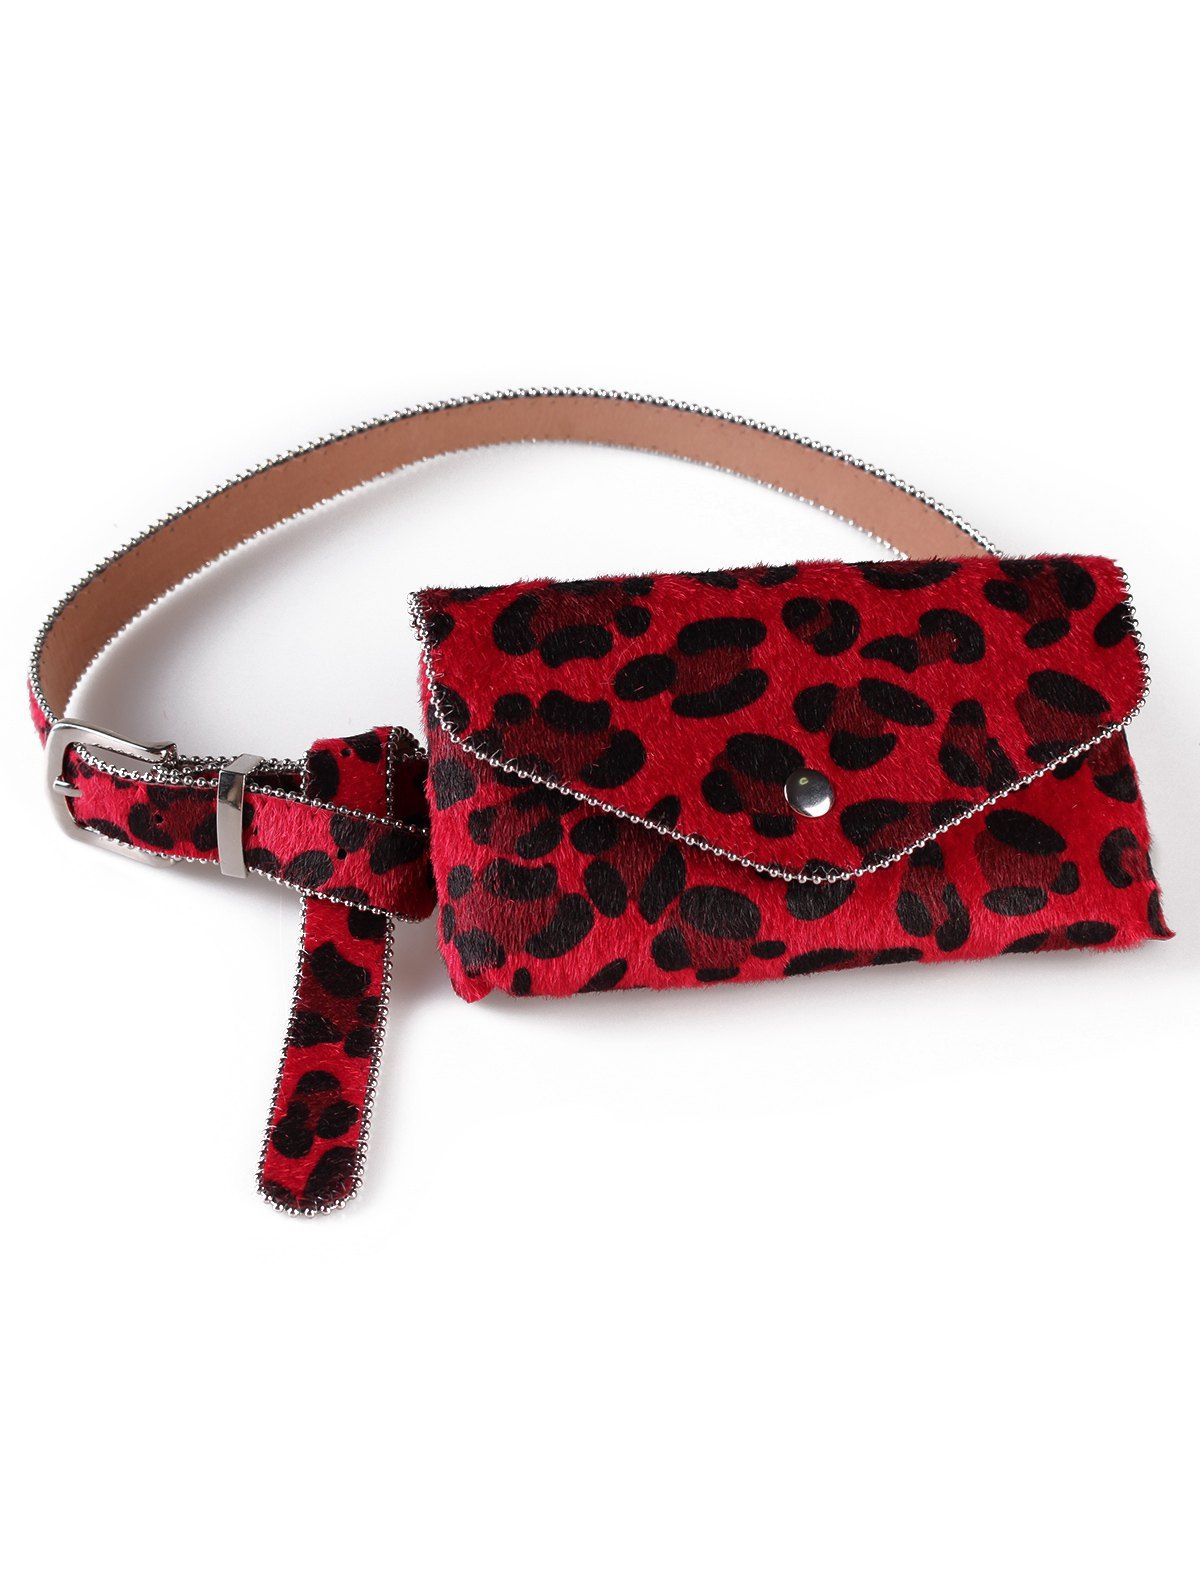 New Stylish Leopard Printed Fanny Pack Belt Bag  